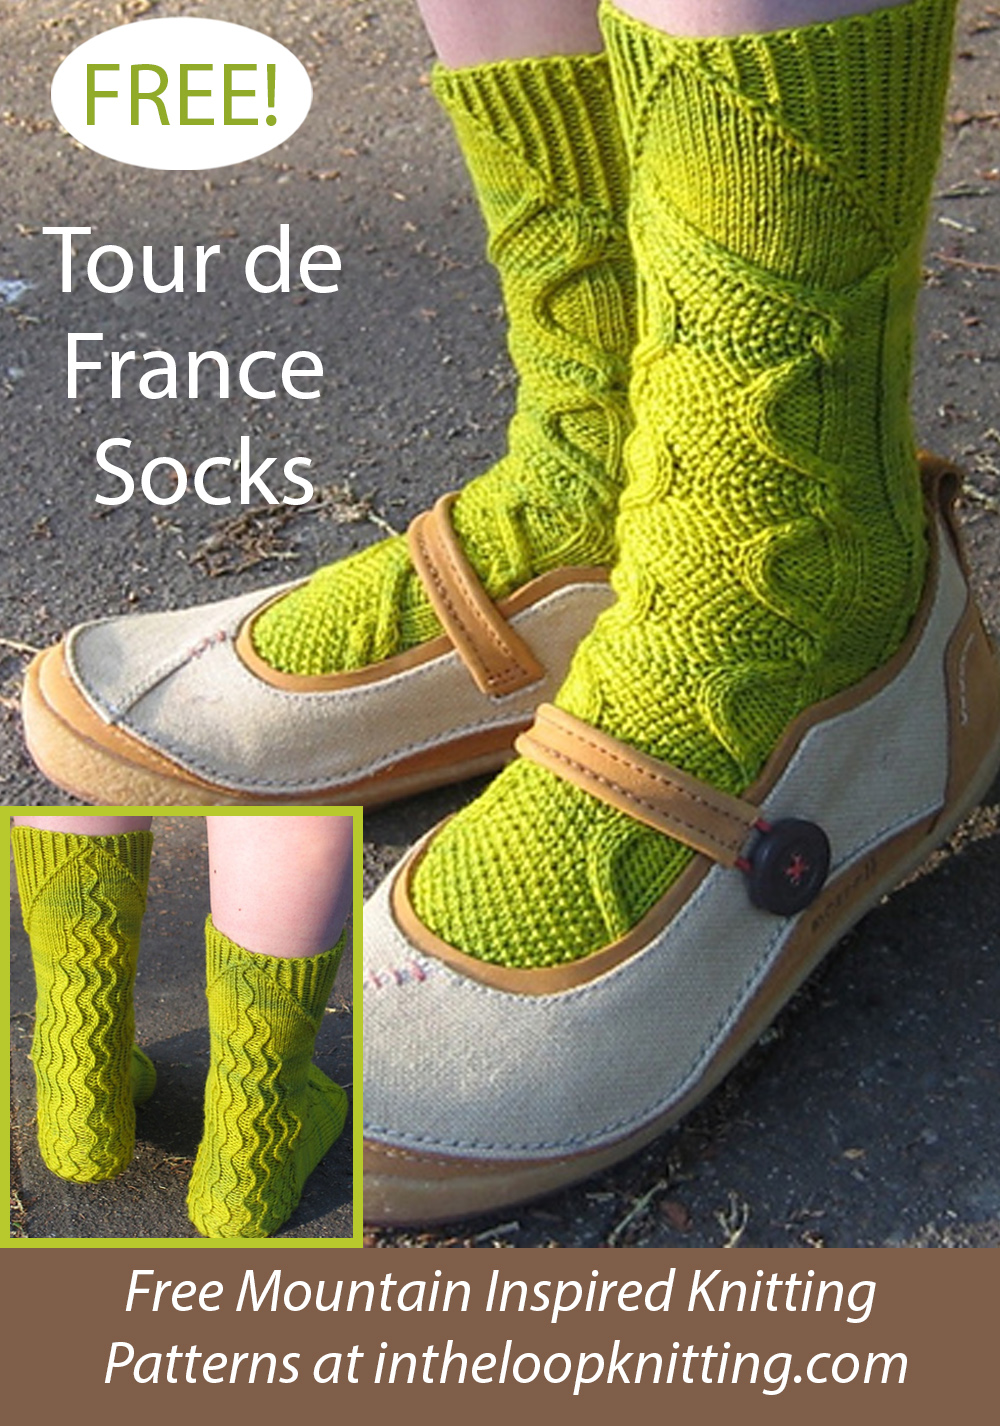 Free Tour de France Socks Knitting Pattern